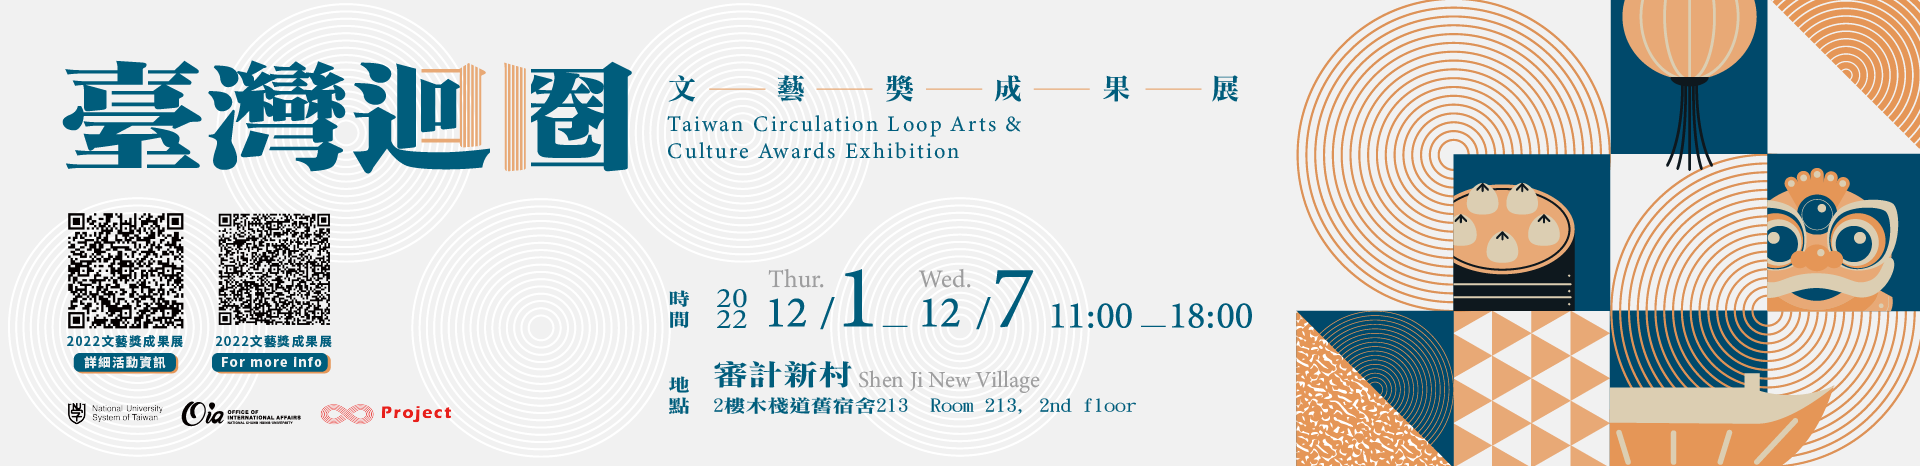 臺國大國際迴圈計畫―臺灣迴圈文藝獎成果展 NUST-Taiwan Circulation Loop Arts & Culture Awards Exhibition